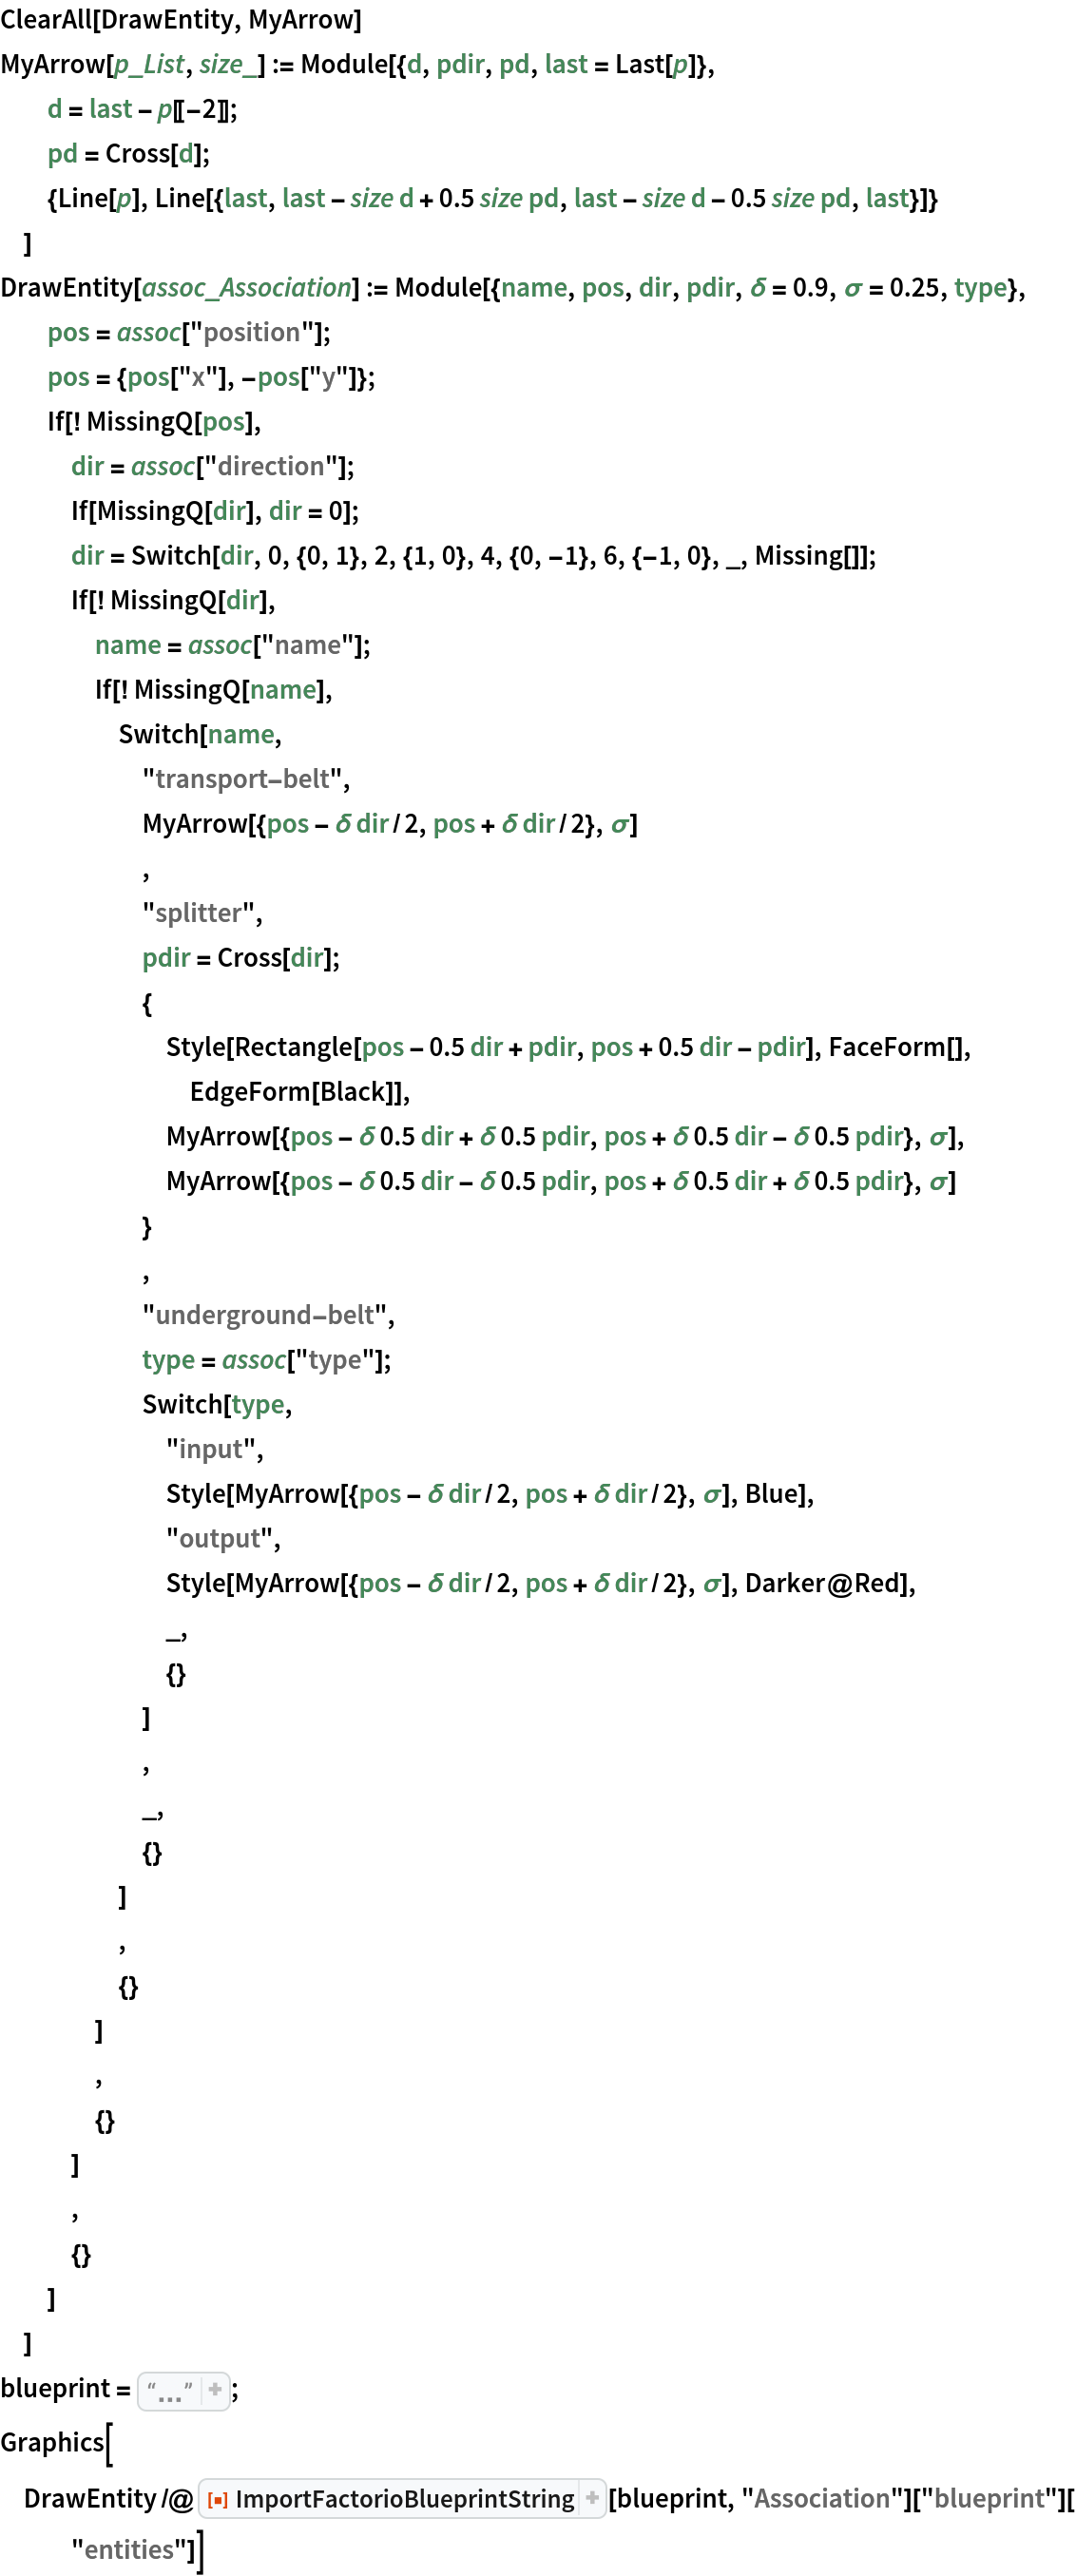 ClearAll[DrawEntity, MyArrow]
MyArrow[p_List, size_] := Module[{d, pdir, pd, last = Last[p]},
  d = last - p[[-2]];
  pd = Cross[d];
  {Line[p], Line[{last, last - size d + 0.5 size pd, last - size d - 0.5 size pd, last}]}
  ]
DrawEntity[assoc_Association] := Module[{name, pos, dir, pdir, \[Delta] = 0.9, \[Sigma] = 0.25, type},
  pos = assoc["position"];
  pos = {pos["x"], -pos["y"]};
  If[! MissingQ[pos],
   dir = assoc["direction"];
   If[MissingQ[dir], dir = 0];
   dir = Switch[dir, 0, {0, 1}, 2, {1, 0}, 4, {0, -1}, 6, {-1, 0}, _, Missing[]];
   If[! MissingQ[dir],
    name = assoc["name"];
    If[! MissingQ[name],
     Switch[name,
      "transport-belt",
      MyArrow[{pos - \[Delta] dir/2, pos + \[Delta] dir/2}, \[Sigma]]
      ,
      "splitter",
      pdir = Cross[dir];
      {
       Style[Rectangle[pos - 0.5 dir + pdir, pos + 0.5 dir - pdir], FaceForm[], EdgeForm[Black]],
       MyArrow[{pos - \[Delta] 0.5 dir + \[Delta] 0.5 pdir, pos + \[Delta] 0.5 dir - \[Delta] 0.5 pdir}, \[Sigma]],
       MyArrow[{pos - \[Delta] 0.5 dir - \[Delta] 0.5 pdir, pos + \[Delta] 0.5 dir + \[Delta] 0.5 pdir}, \[Sigma]]
       }
      ,
      "underground-belt",
      type = assoc["type"];
      Switch[type,
       "input",
       Style[
        MyArrow[{pos - \[Delta] dir/2, pos + \[Delta] dir/2}, \[Sigma]], Blue],
       "output",
       Style[
        MyArrow[{pos - \[Delta] dir/2, pos + \[Delta] dir/2}, \[Sigma]], Darker@Red],
       _,
       {}
       ]
      ,
      _,
      {}
      ]
     ,
     {}
     ]
    ,
    {}
    ]
   ,
   {}
   ]
  ]
blueprint = "0eNqdlt1ugzAMhd/F16wiDr95lWmaShtVkSCgEKahindfgG1CKx5priCQfBz72DJ3qOpBdkZpC+IO6tLqHsTrHXp10+d6fmbHToIAZWUDEehzM6+sOeu+a419qWRtYYpA6av8BMGm6PBw39XKWmk2x3B6i0Bqq6ySq4BlMb7roancTsEeT0fQtb070Or5Sw6Suk0jiKI8pdMs4w8CfRD8XwSnErCj5ZQuqNLduDivysjL+j7bASf+4PgHHO9rTANQbB+V/aIGZ5O5mdZdDwOOl4C/nW8H2w1zgTzAc3+dSOYSd8CFP5gfJKAMQBG2sPiZZOKTyWQsoDI5oRQDKoj7OMO4TwviSkRCXRJQN1SkaYC/3KefWRaQw4RQmQewUoJVBLV0sq1CpakiLJ+wlxCIcYAlFIsFsAgTEIPa1y9xyP2nW5kRAhP/8bYy3MRd5rLY/ANE8CFNvzZwwZK8xBzjnLEcp+kLwXup2A==";
Graphics[
 DrawEntity /@ ResourceFunction["ImportFactorioBlueprintString"][blueprint, "Association"]["blueprint"]["entities"]]